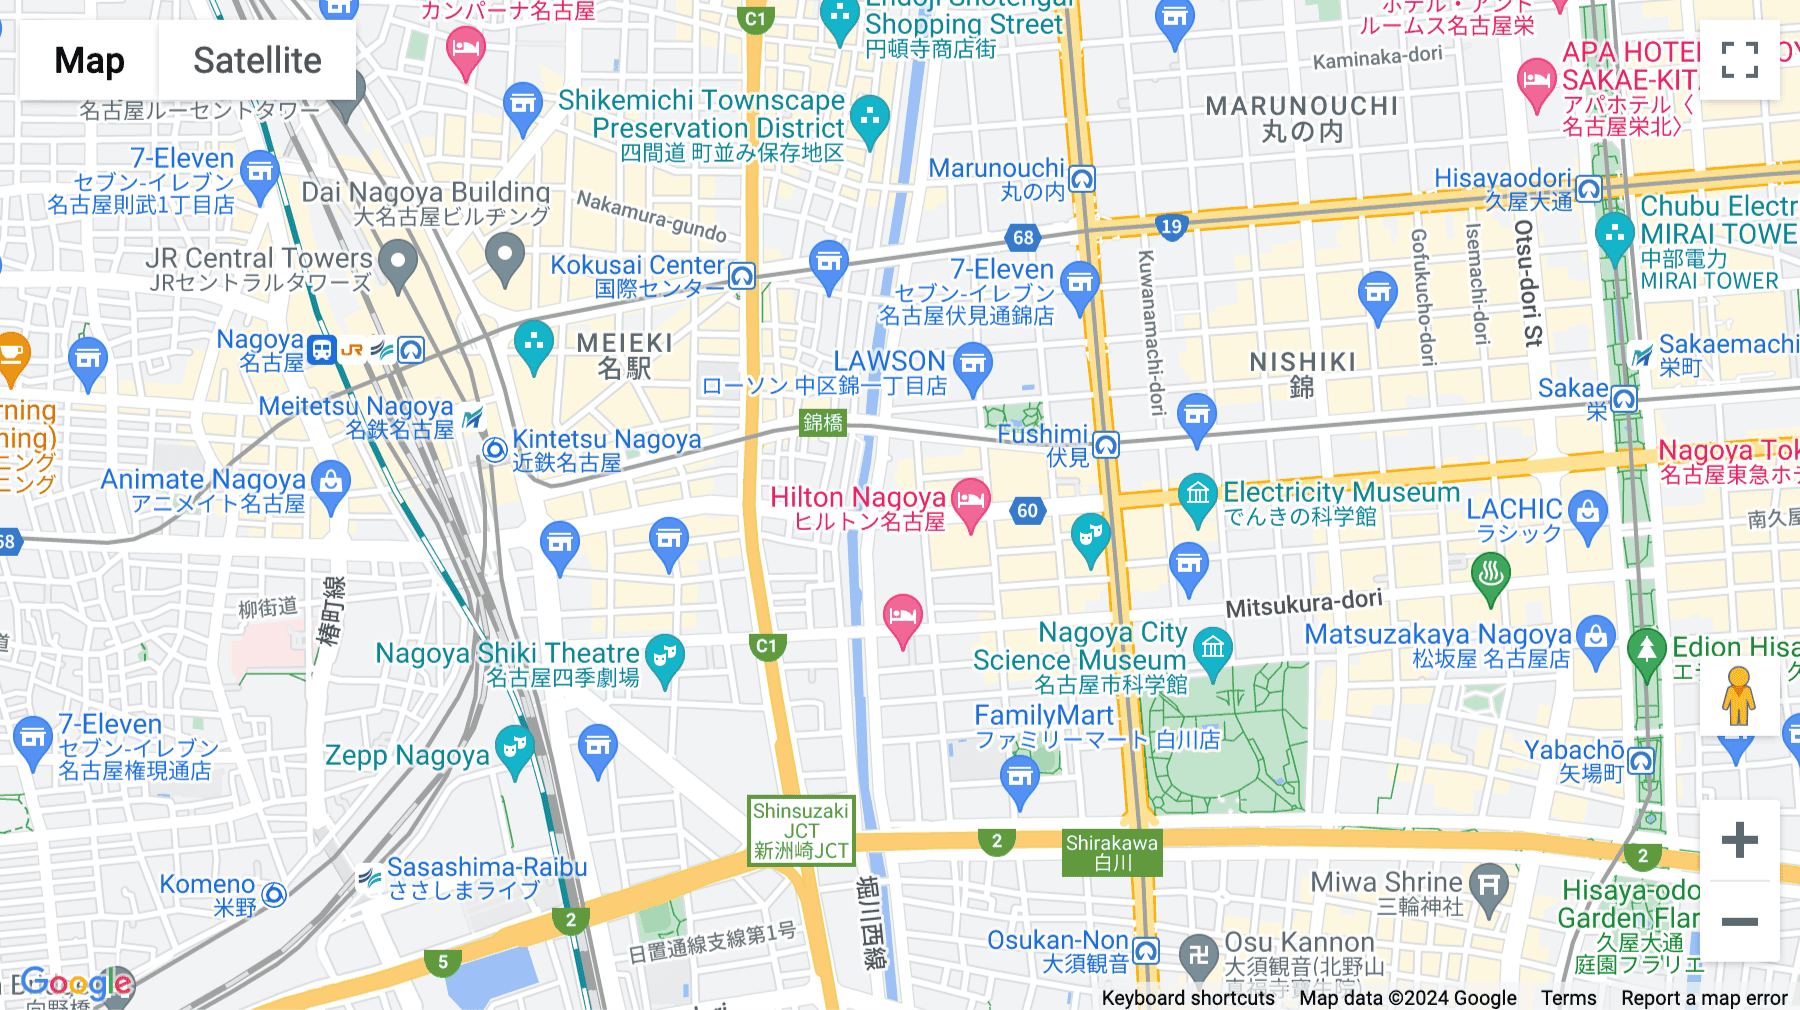 Click for interative map of Nagoya, Fushimi, Aichi, Naka-ku, Nagoya-shi, 4th floor 1-5-11, Nagoya City